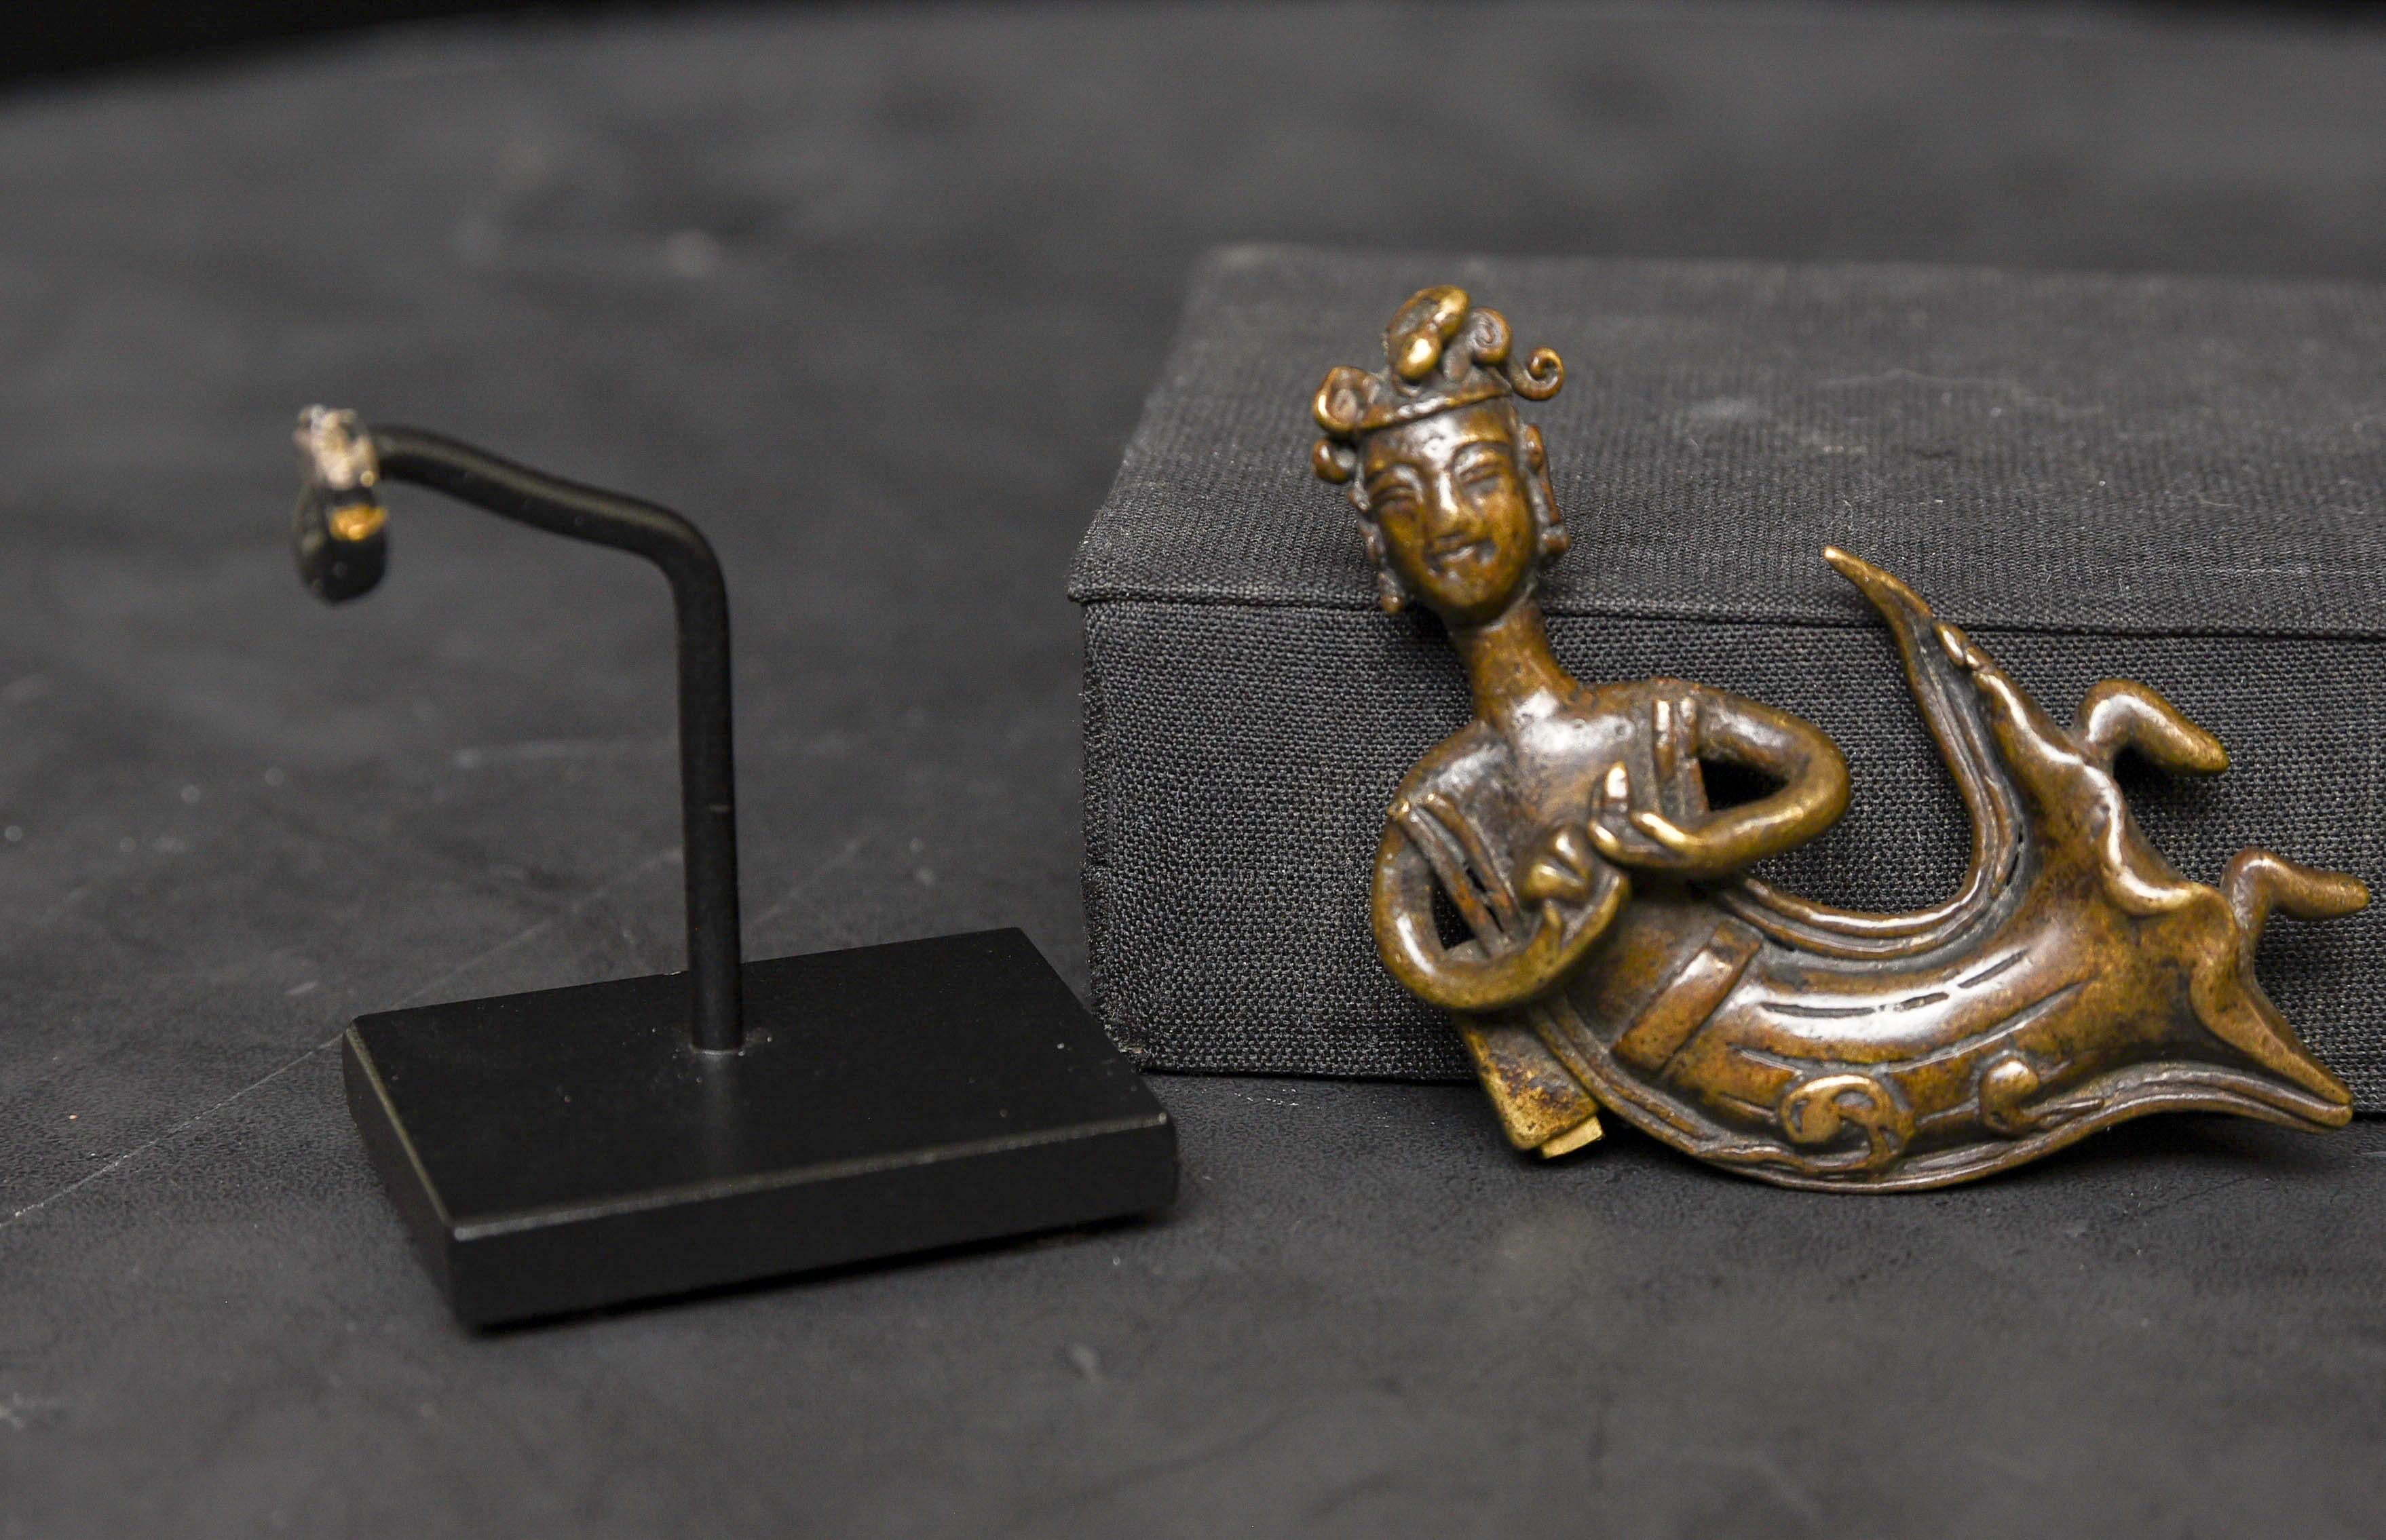 5/6thC Chinese Bronze Buddha - 9585 For Sale 7